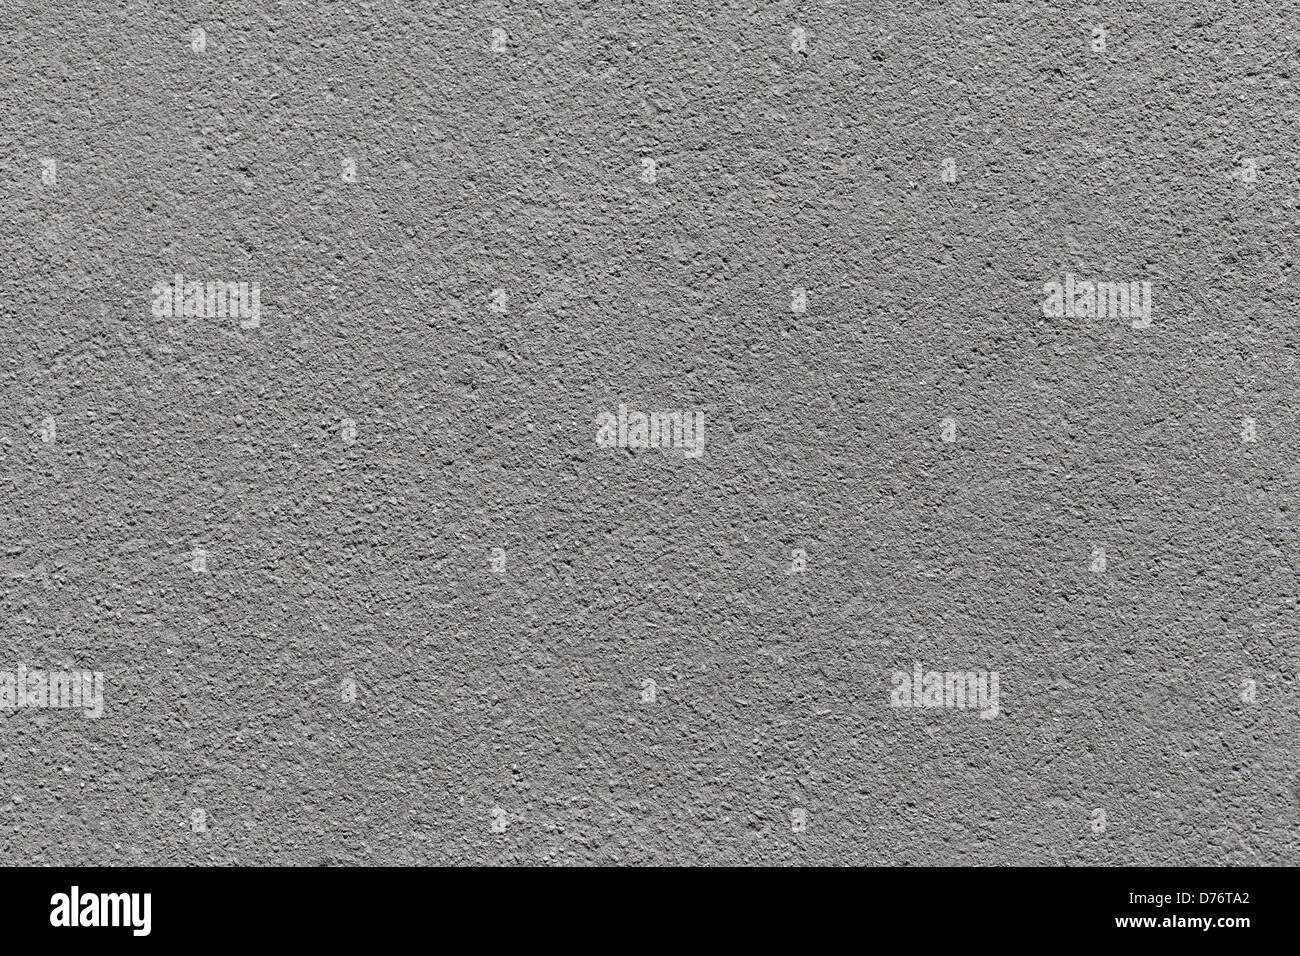 Close-up texture of gray urban asphalt road Stock Photo